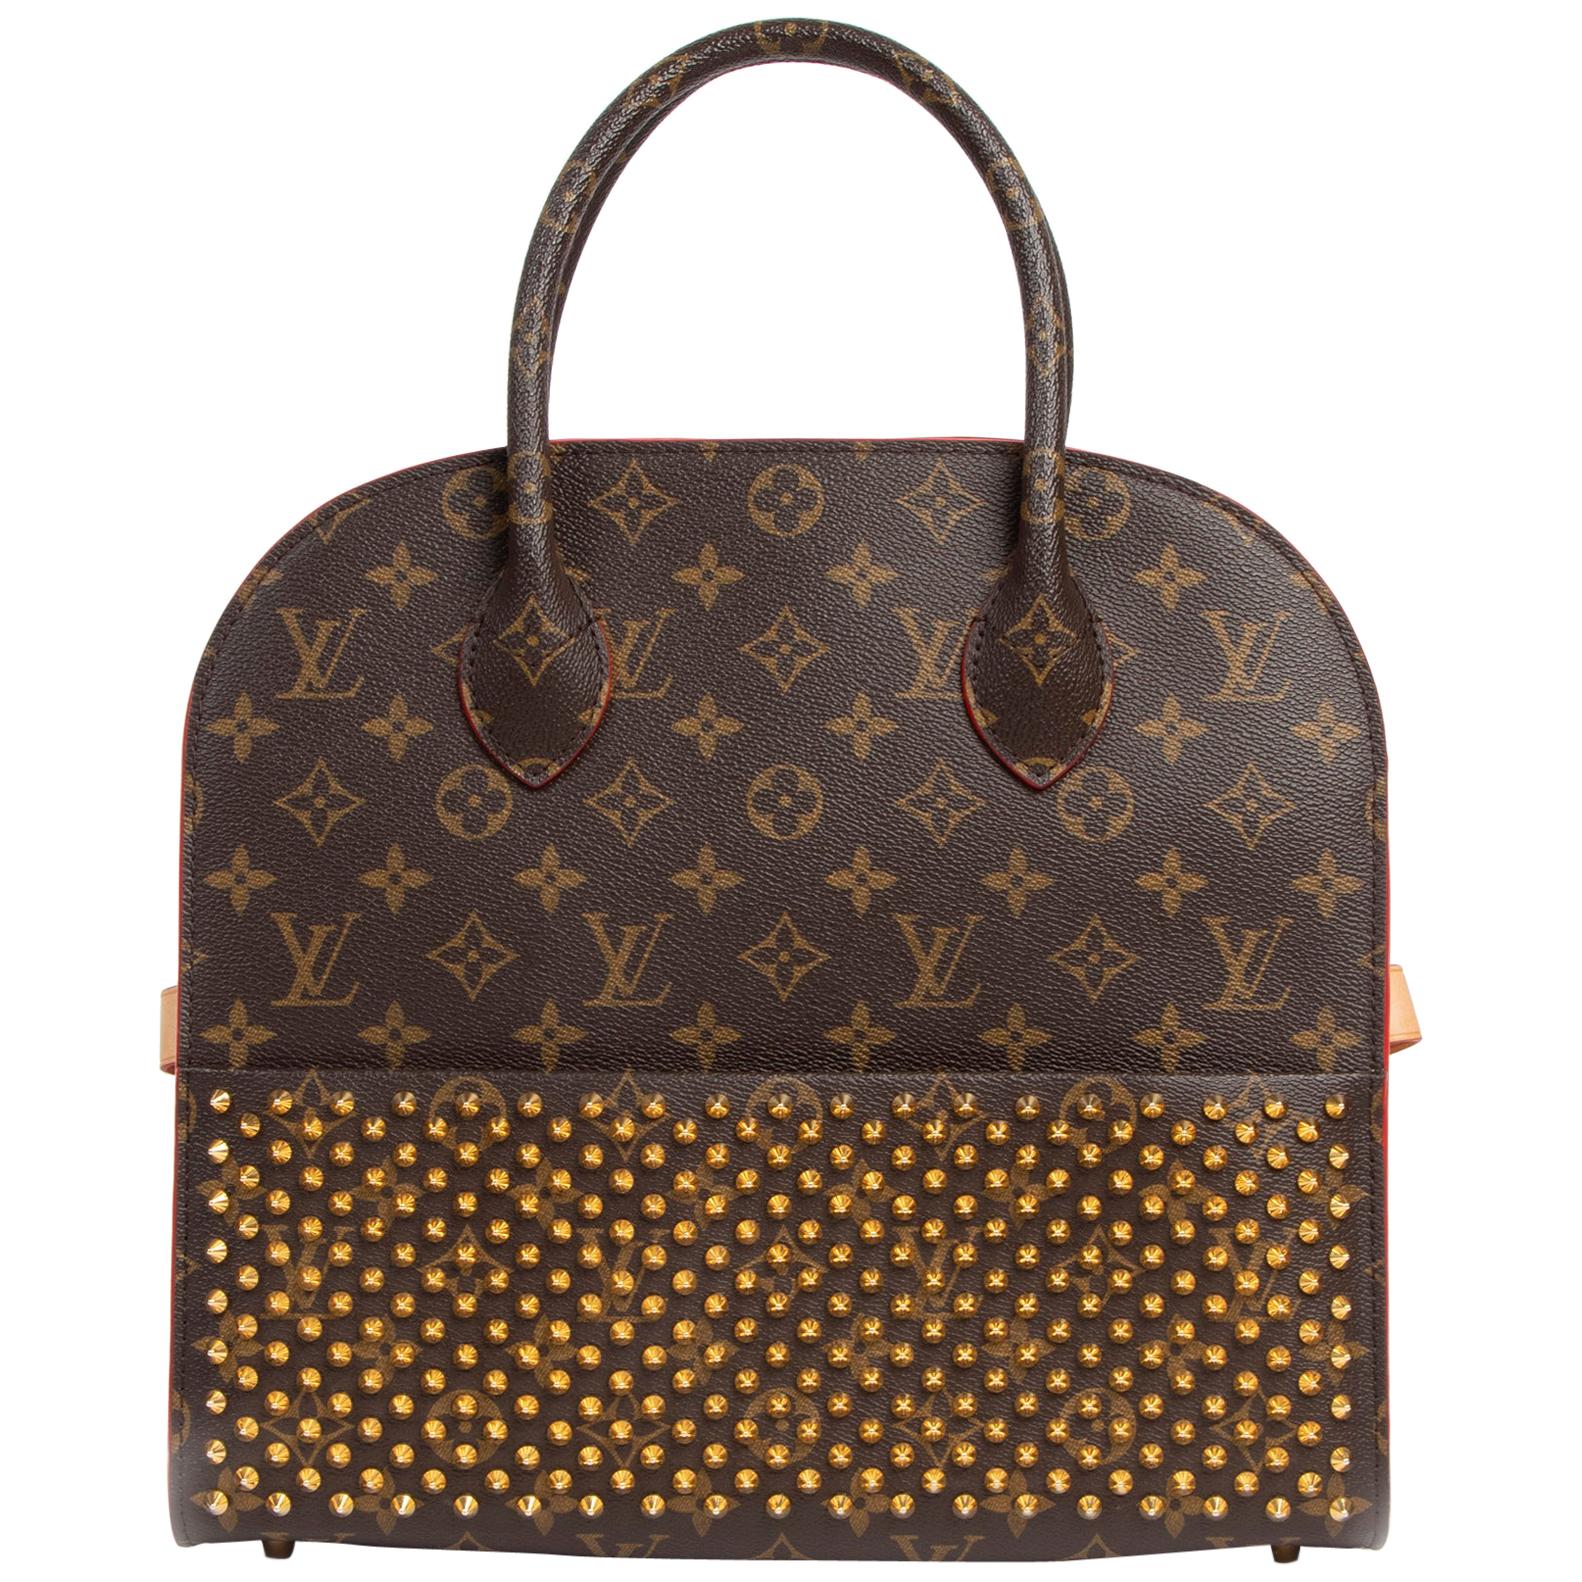 Louis Vuitton x Christian Louboutin "The Shopper" Iconoclast Bag